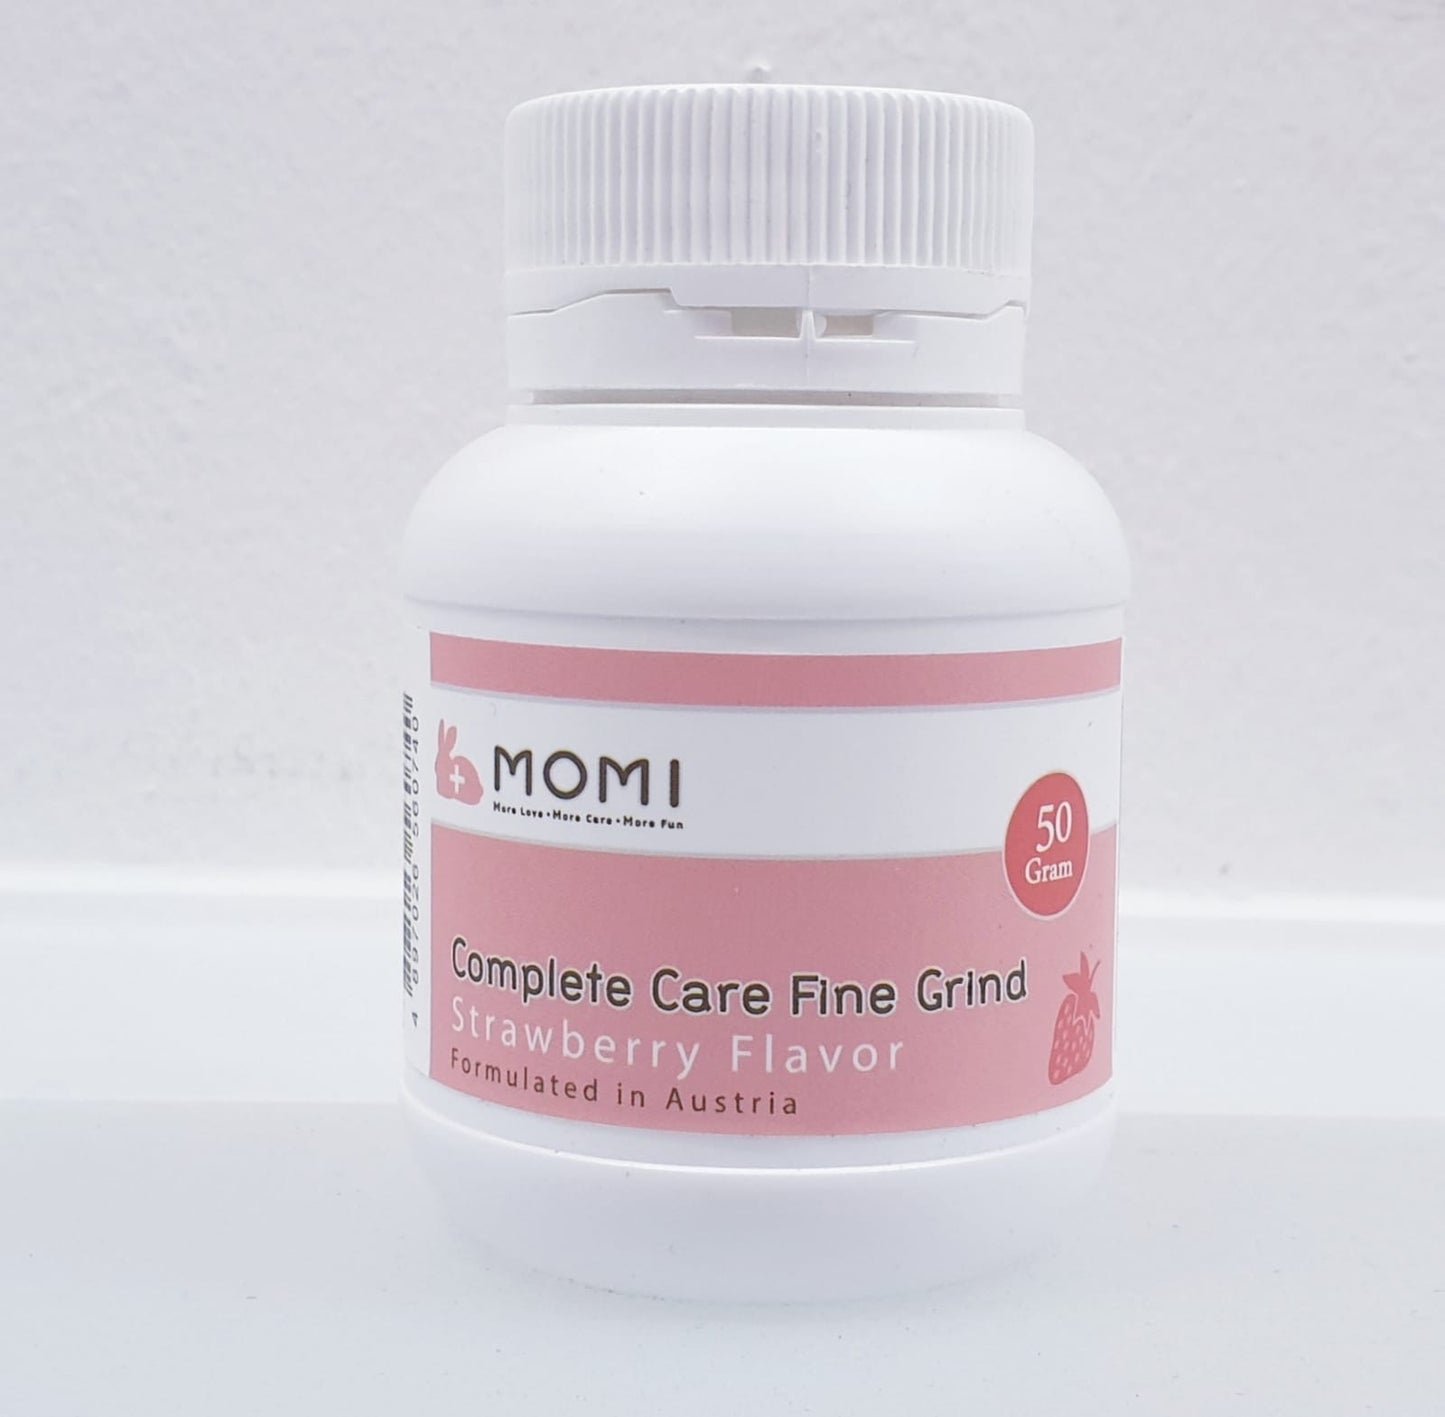 Momi Complete Care Fine Grind - Strawberry Flavor